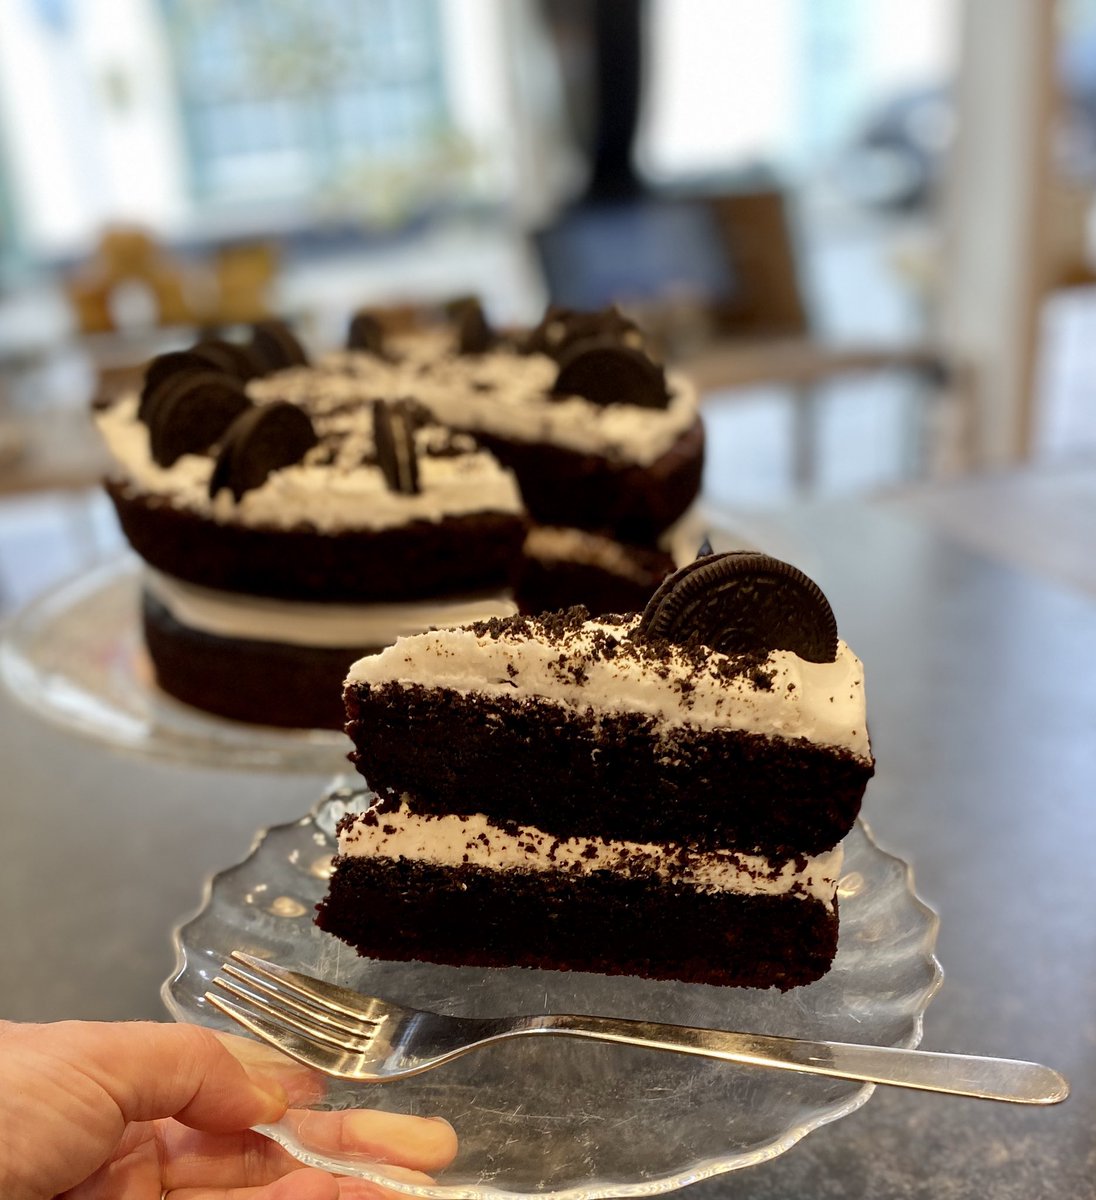 Today’s cake by the slice
.
Cookies & Cream
.
#vegancakebytheslice #caketogo #norwichlanes #vegancake #dairyfreecake #fridaytreat #upperstgiles